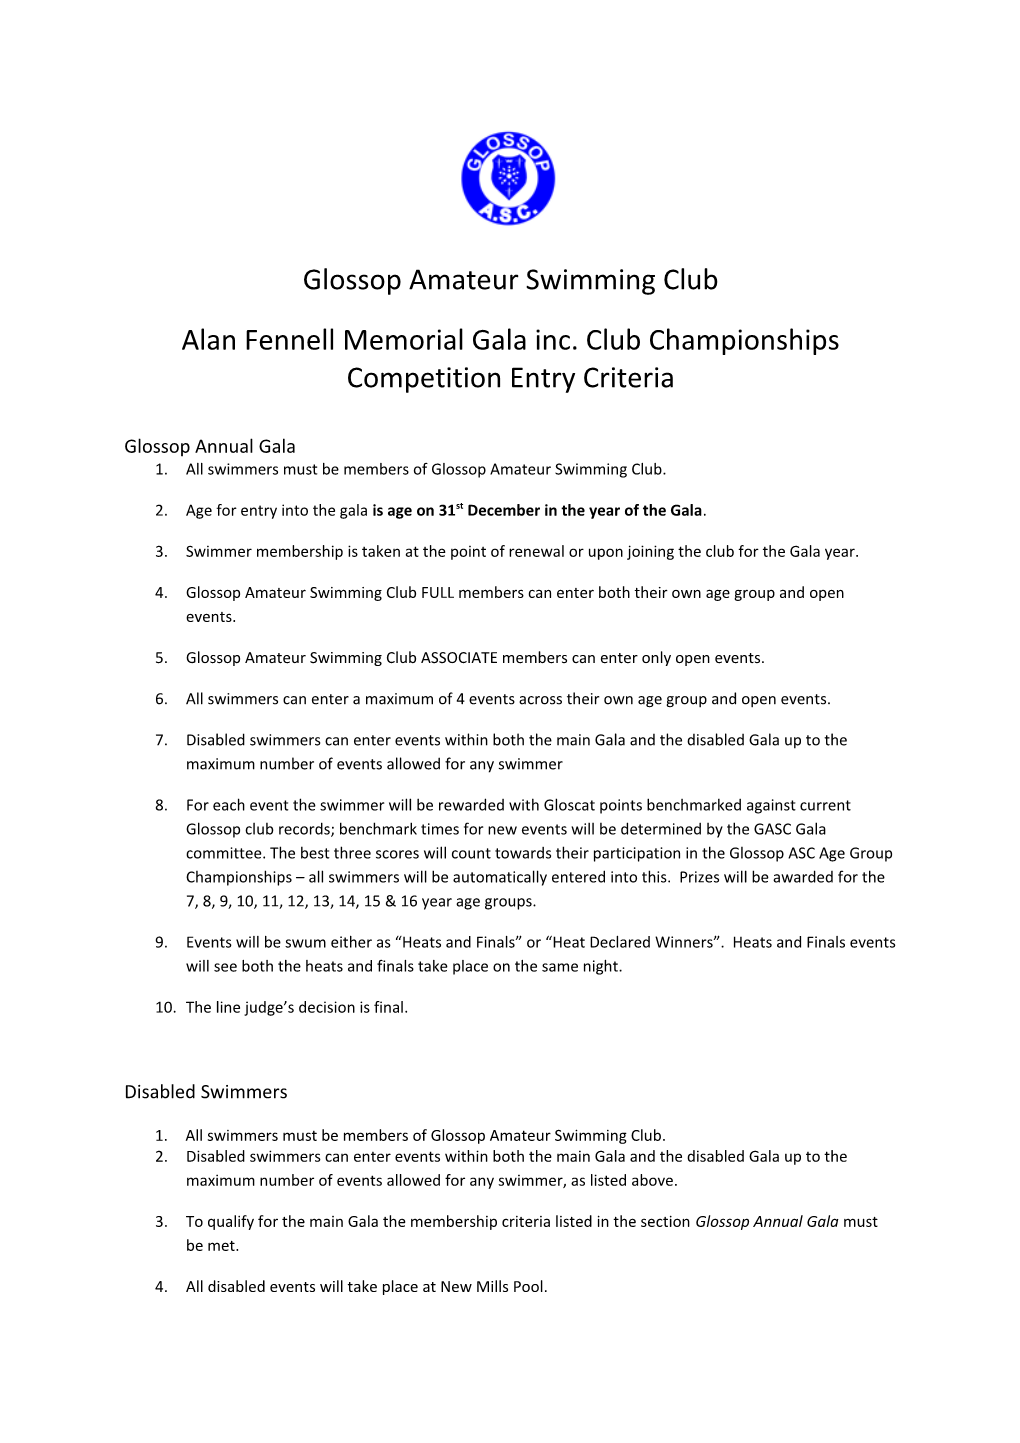 Alan Fennell Memorial Gala Inc. Club Championships